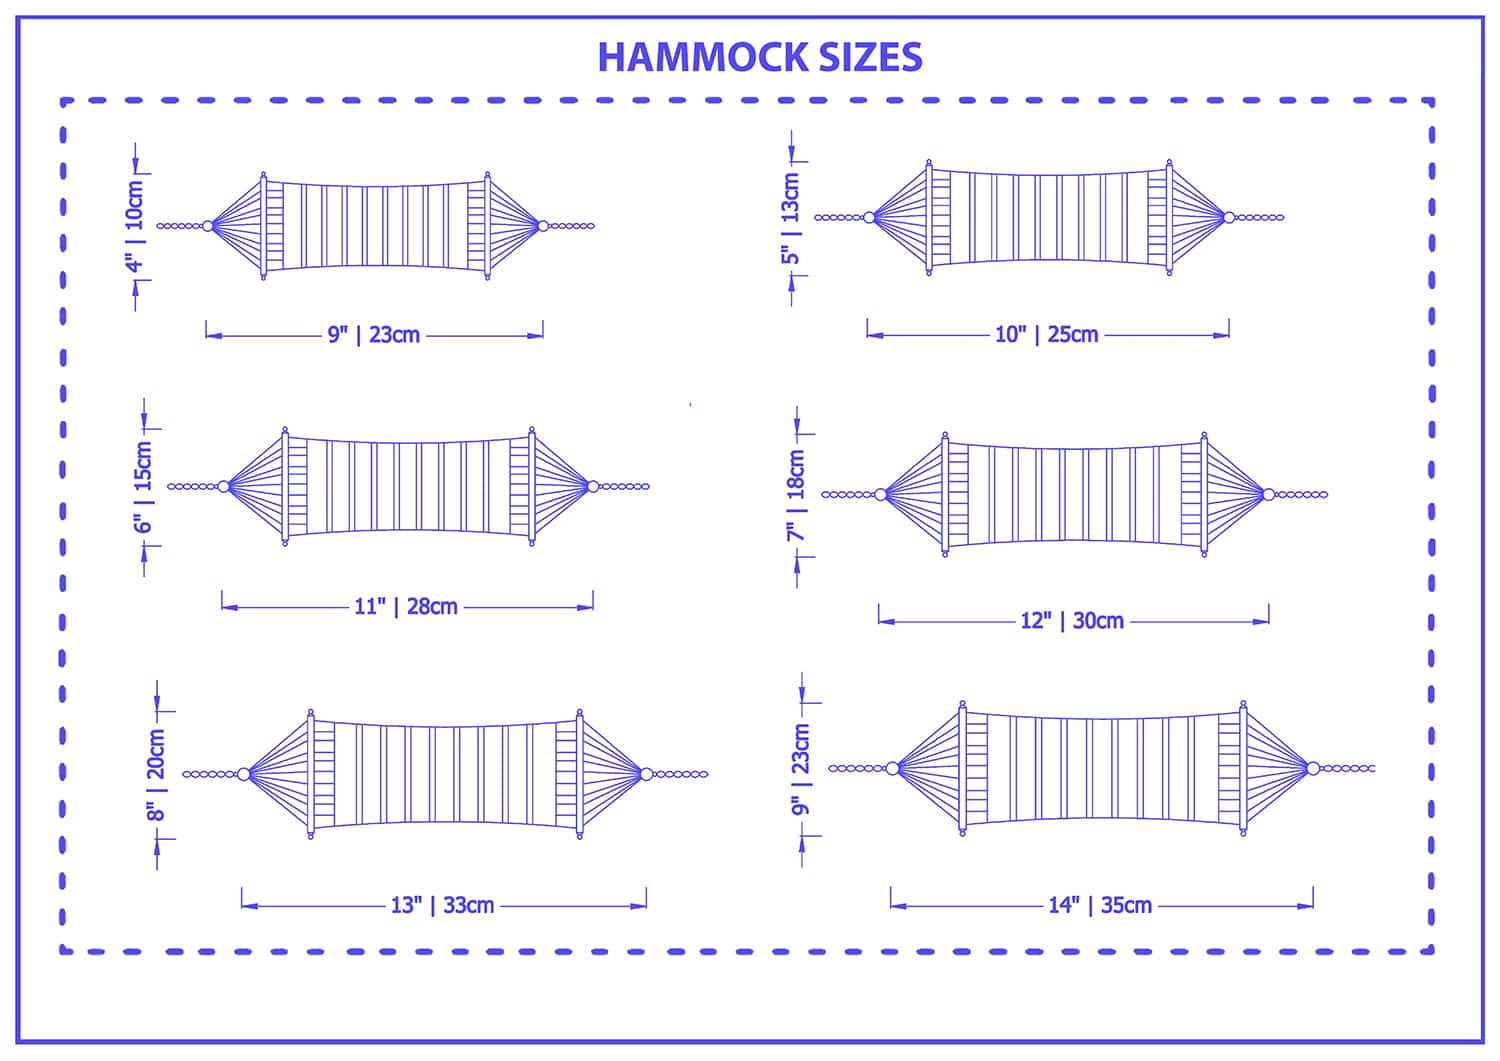 Hammock sizes